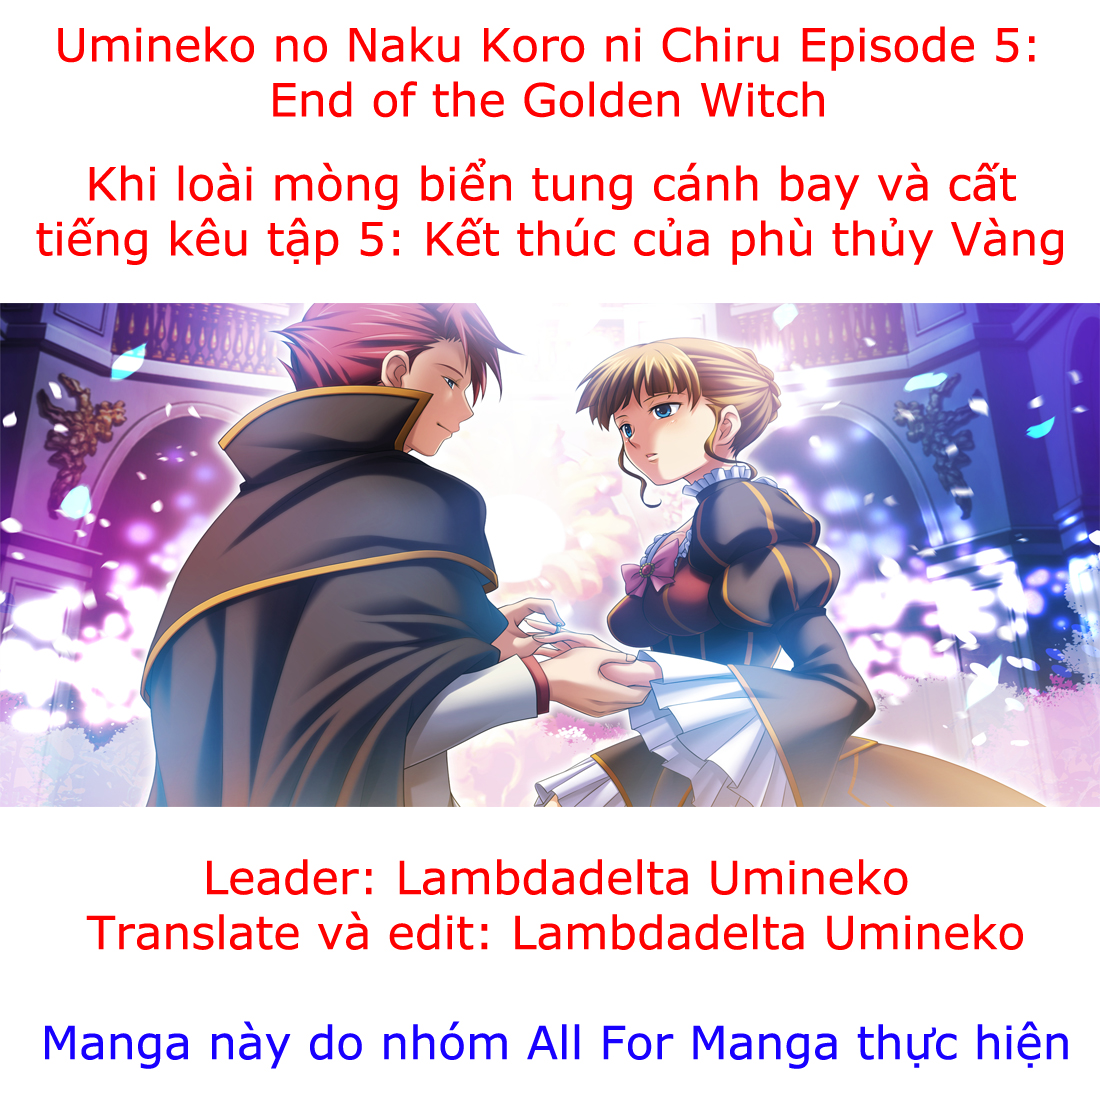 Umineko no Naku Koro ni Episode 5: End of the Golden Witch